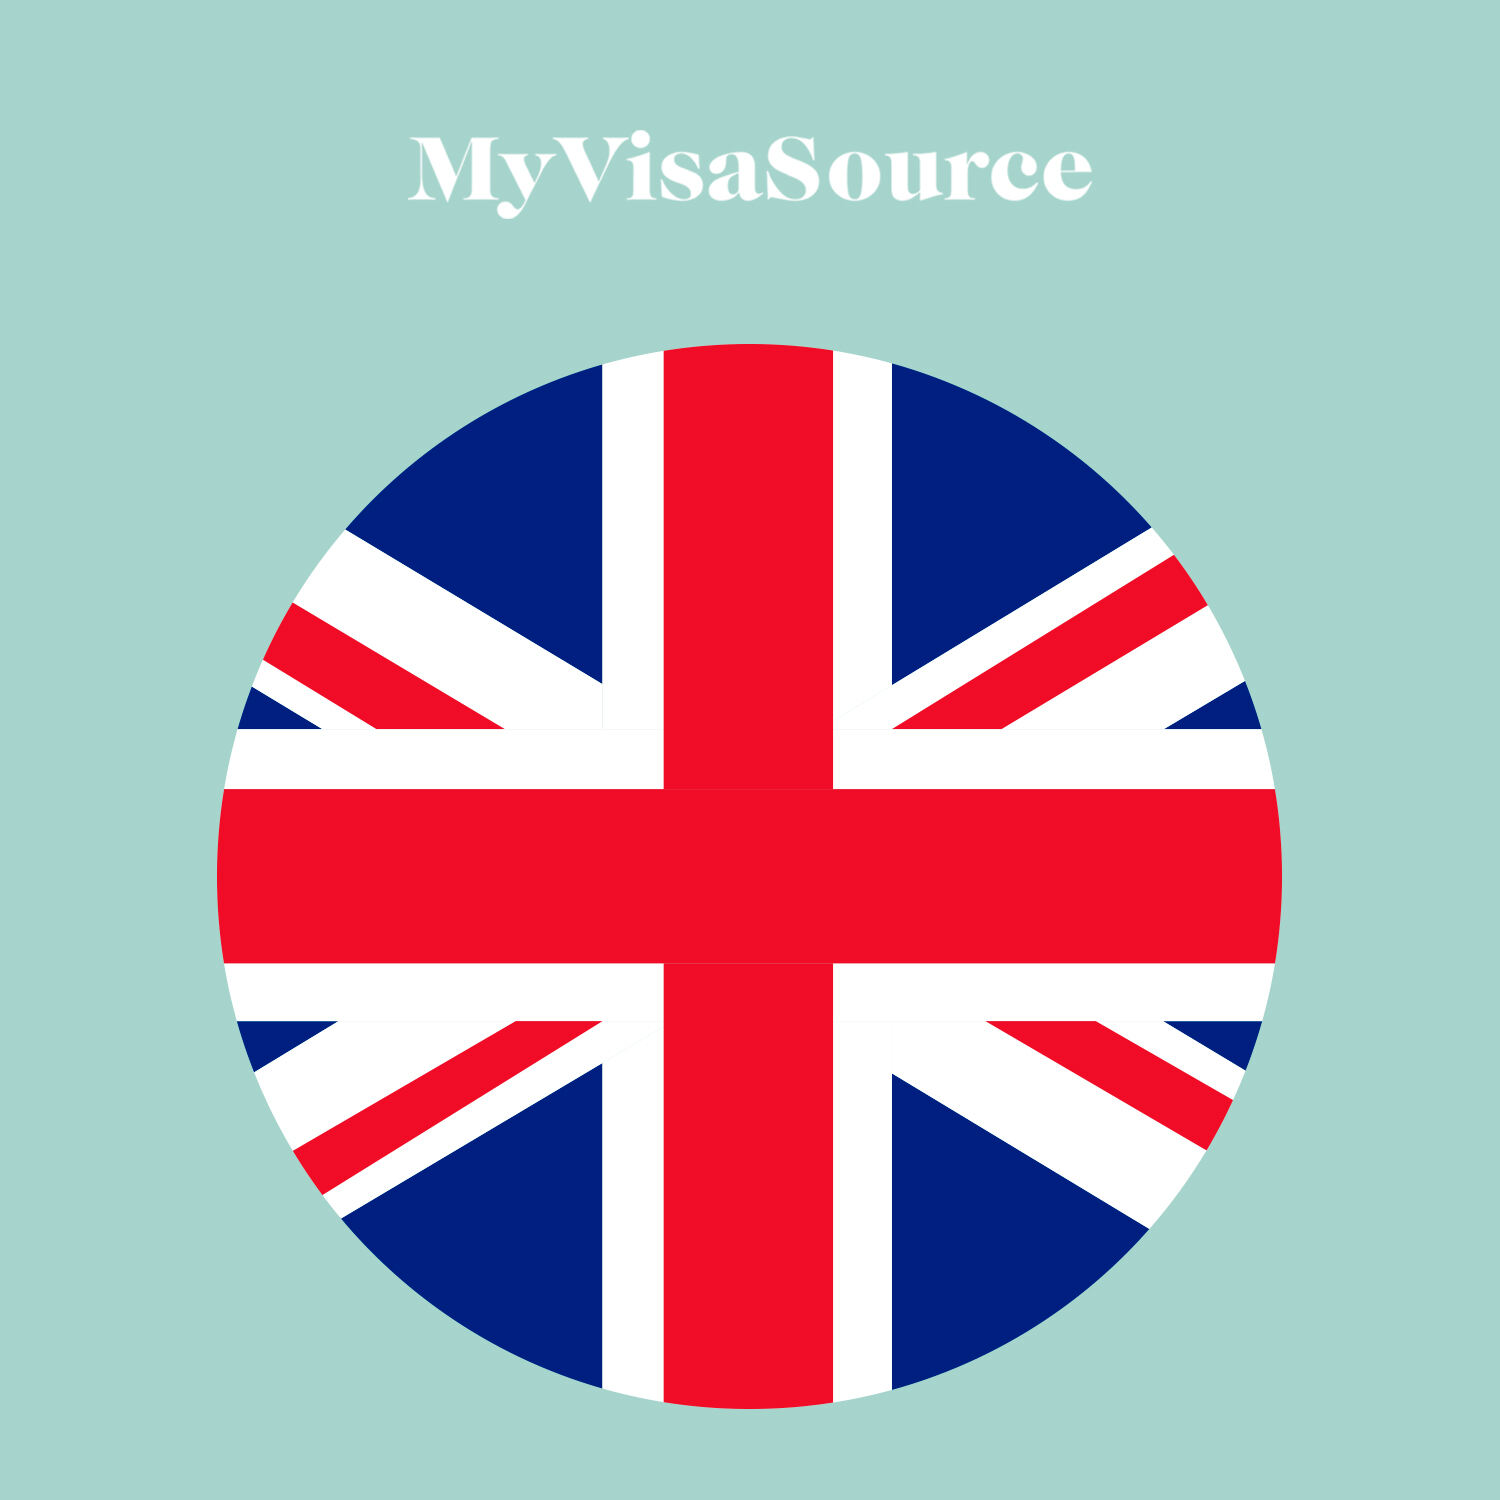 united kingdom flag within a circle shape my visa source